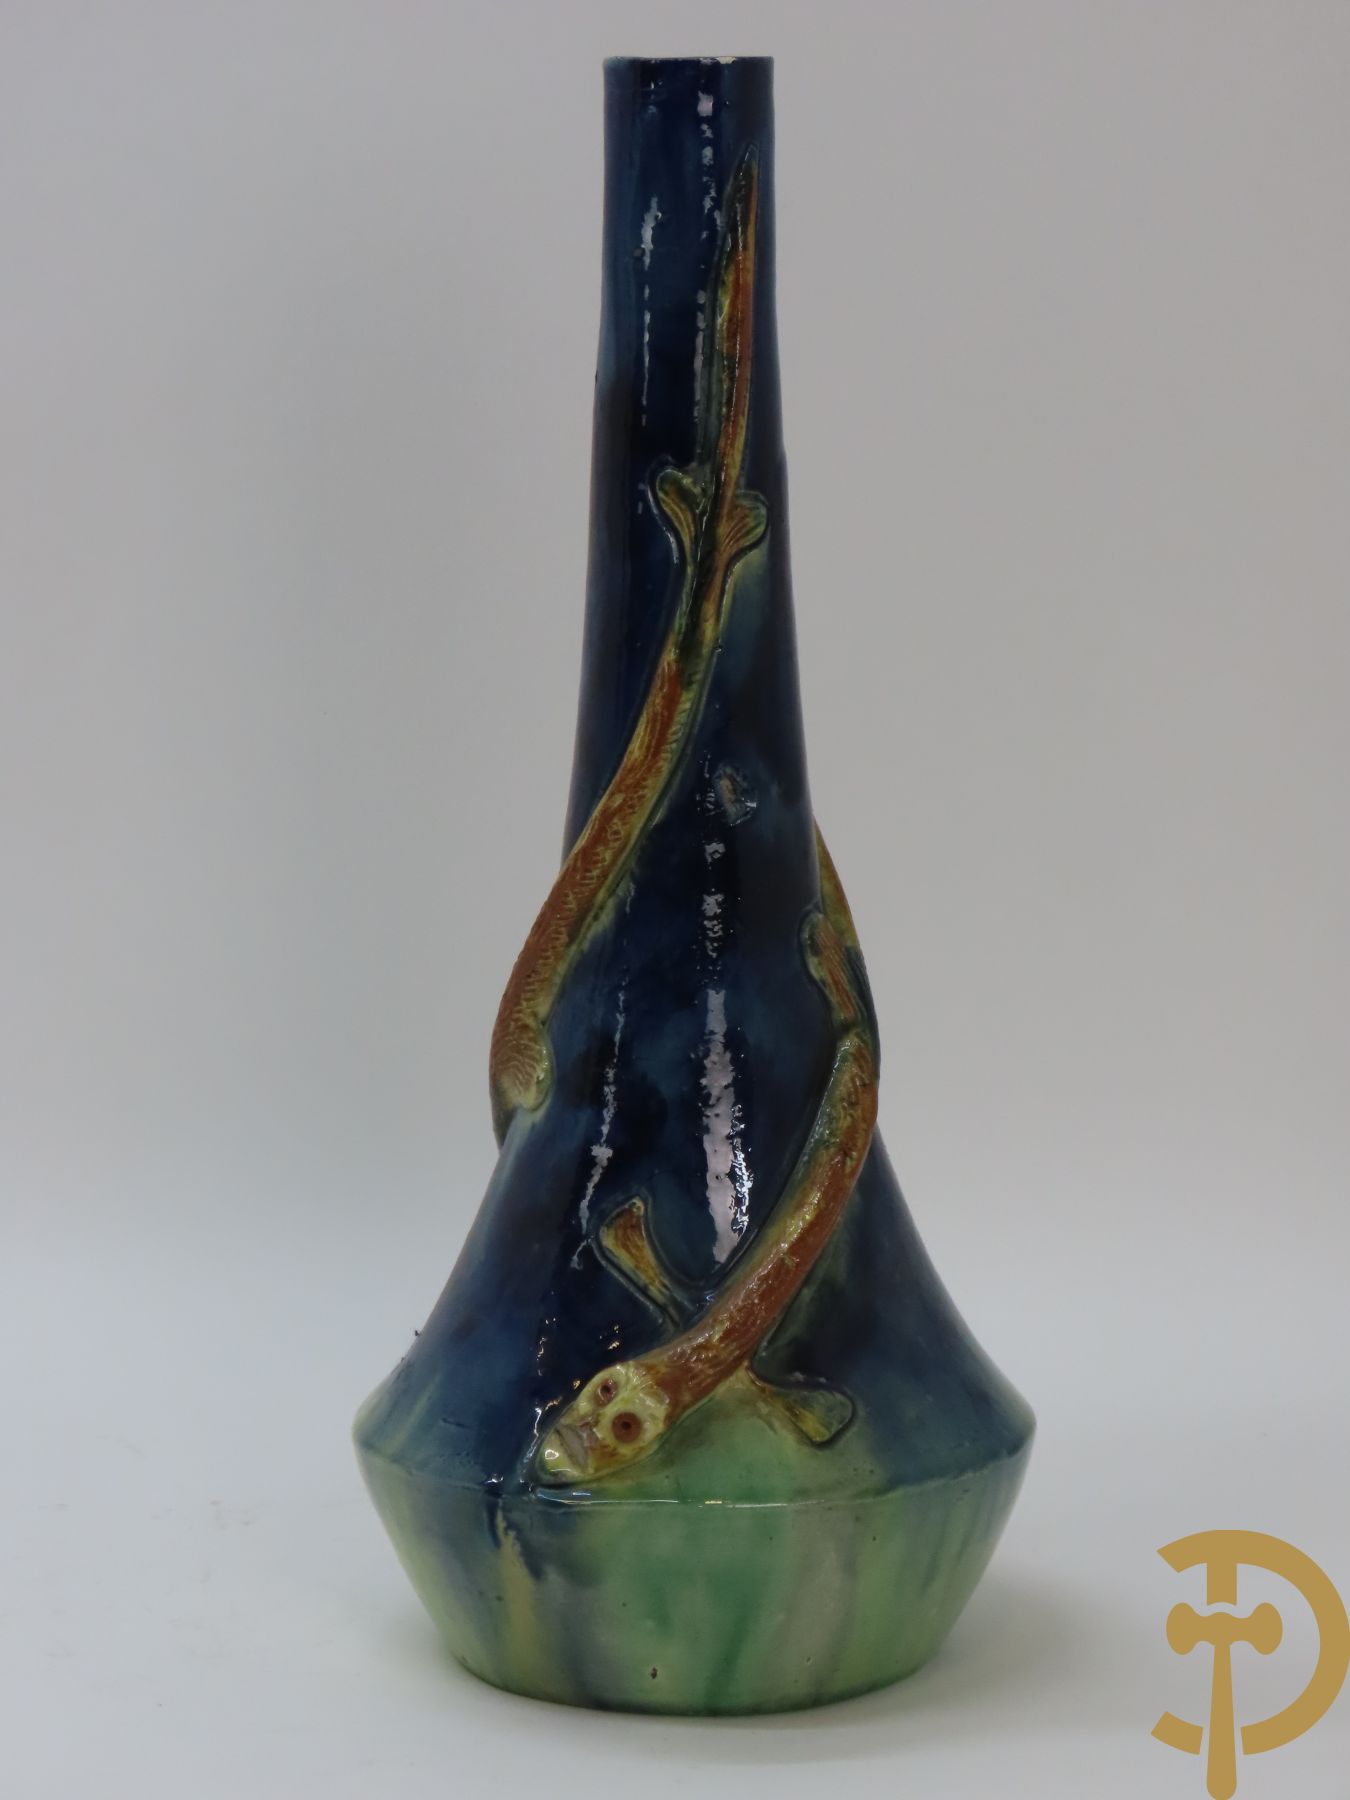 Vlaams aardewerken flesvormige vaas met 2 vissen, onderaan gemerkt Den Uil